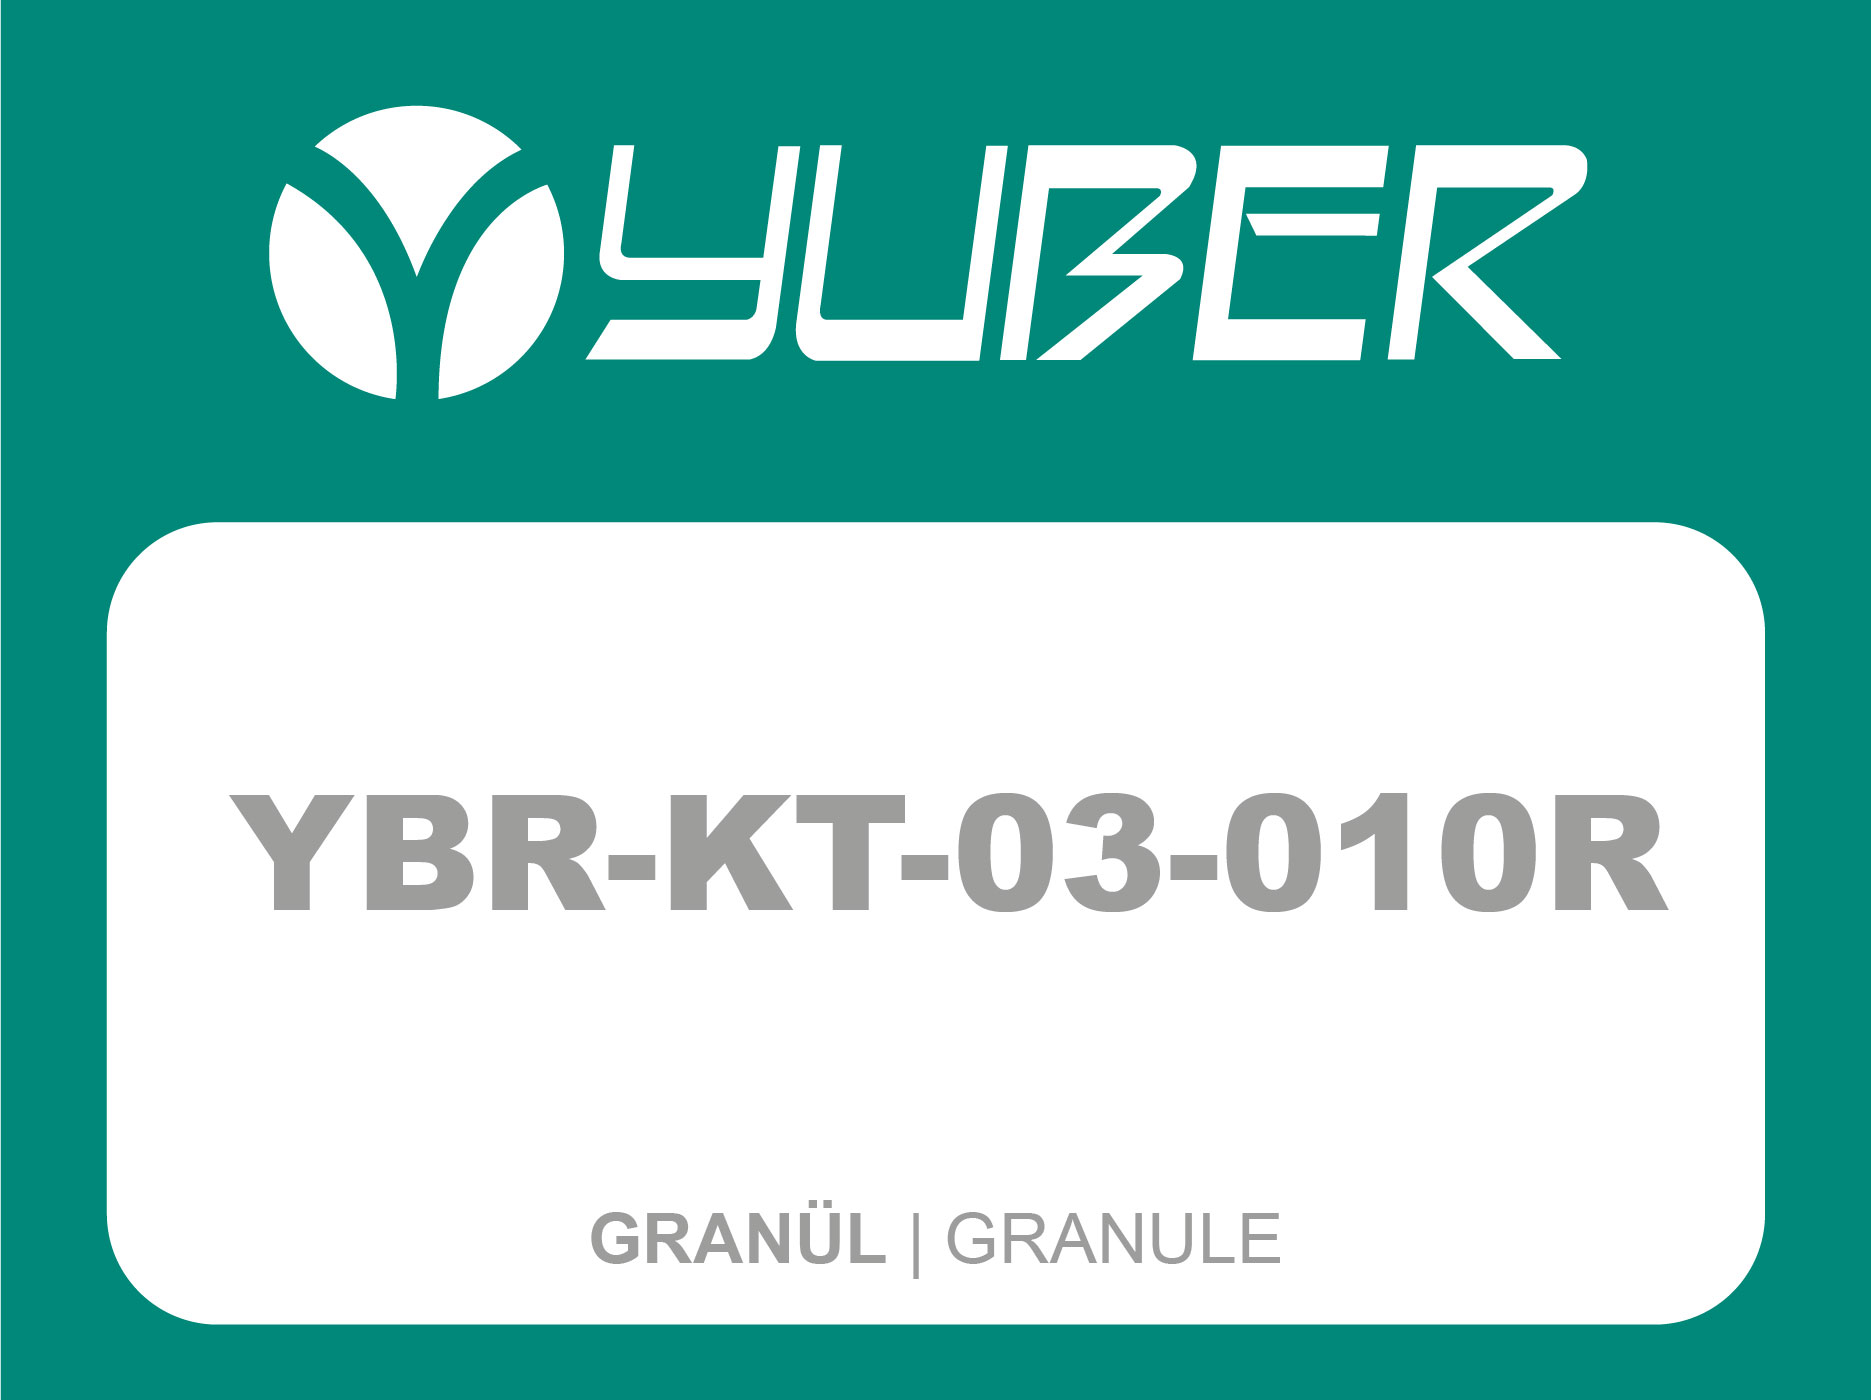 YBR KT 03 010 R Granule Yuber Metallurgy